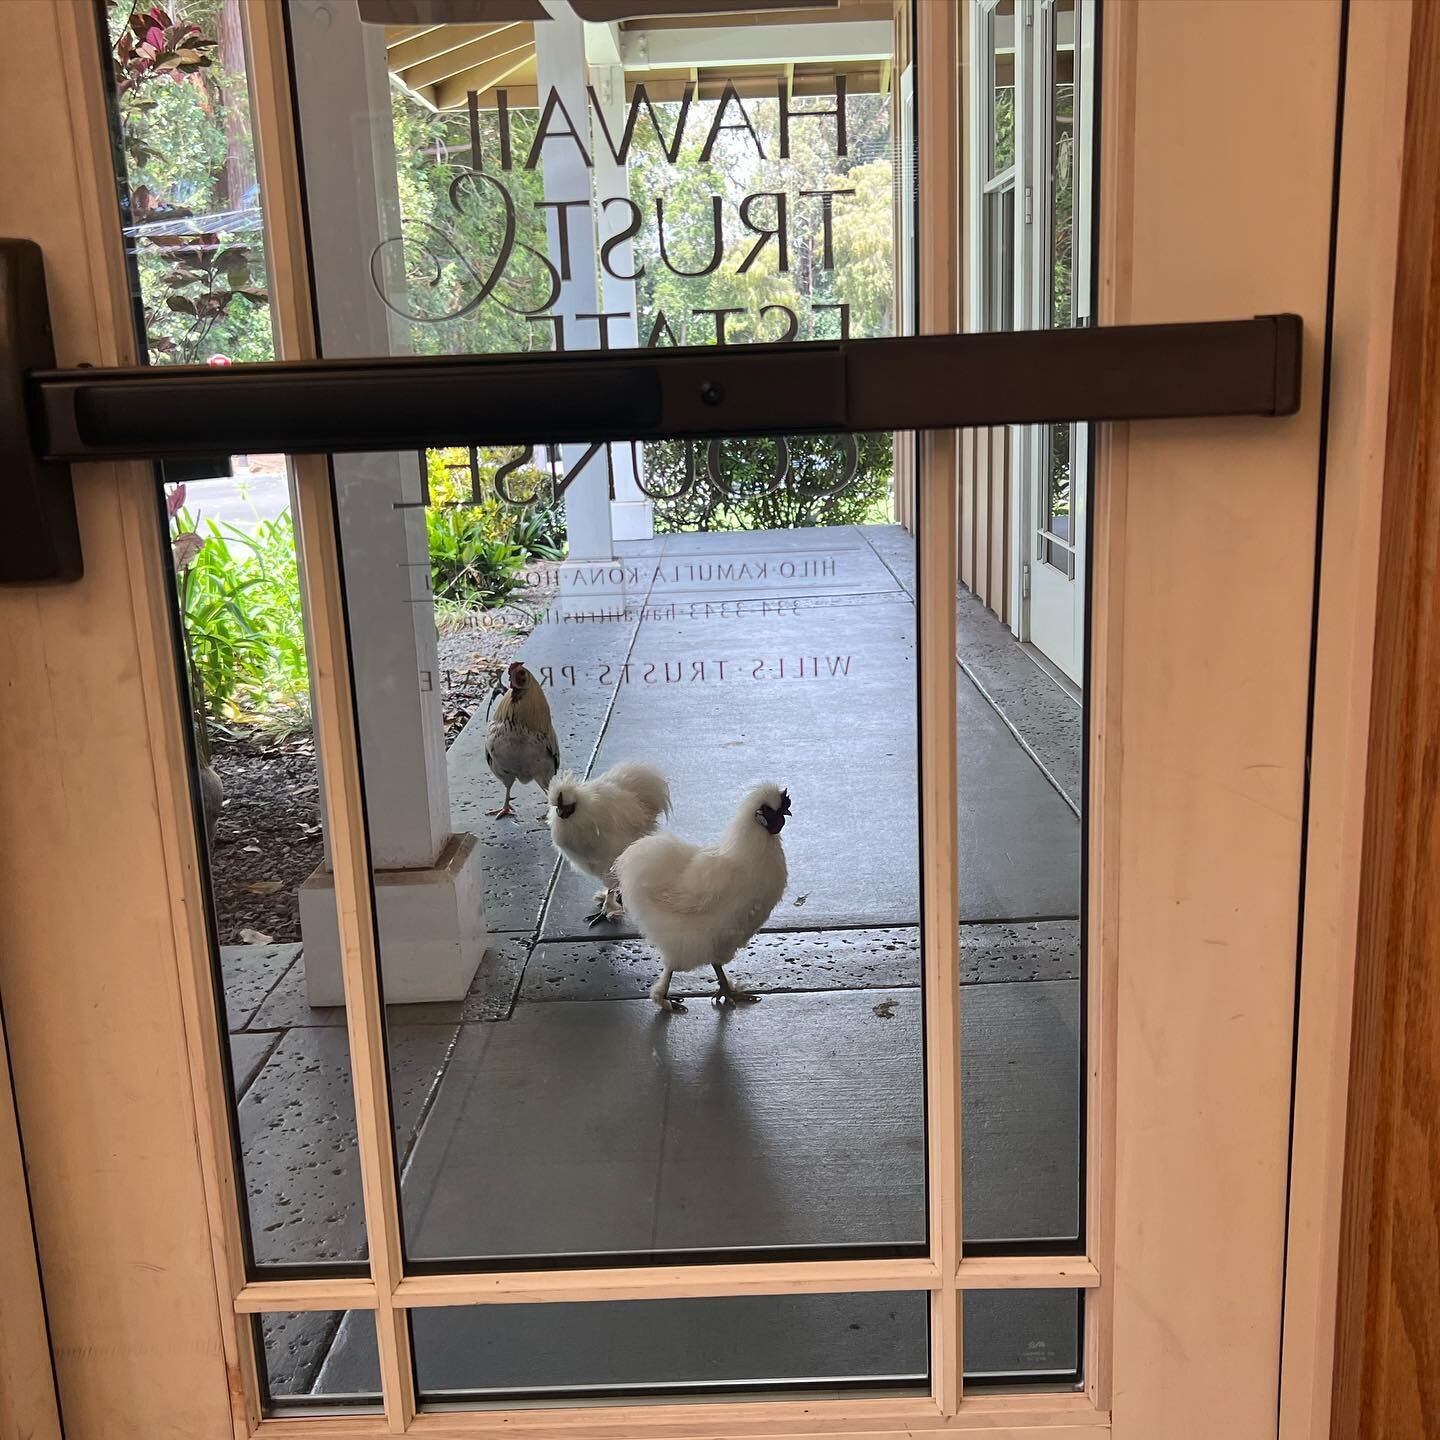 Fluffy visitors to the Waimea office